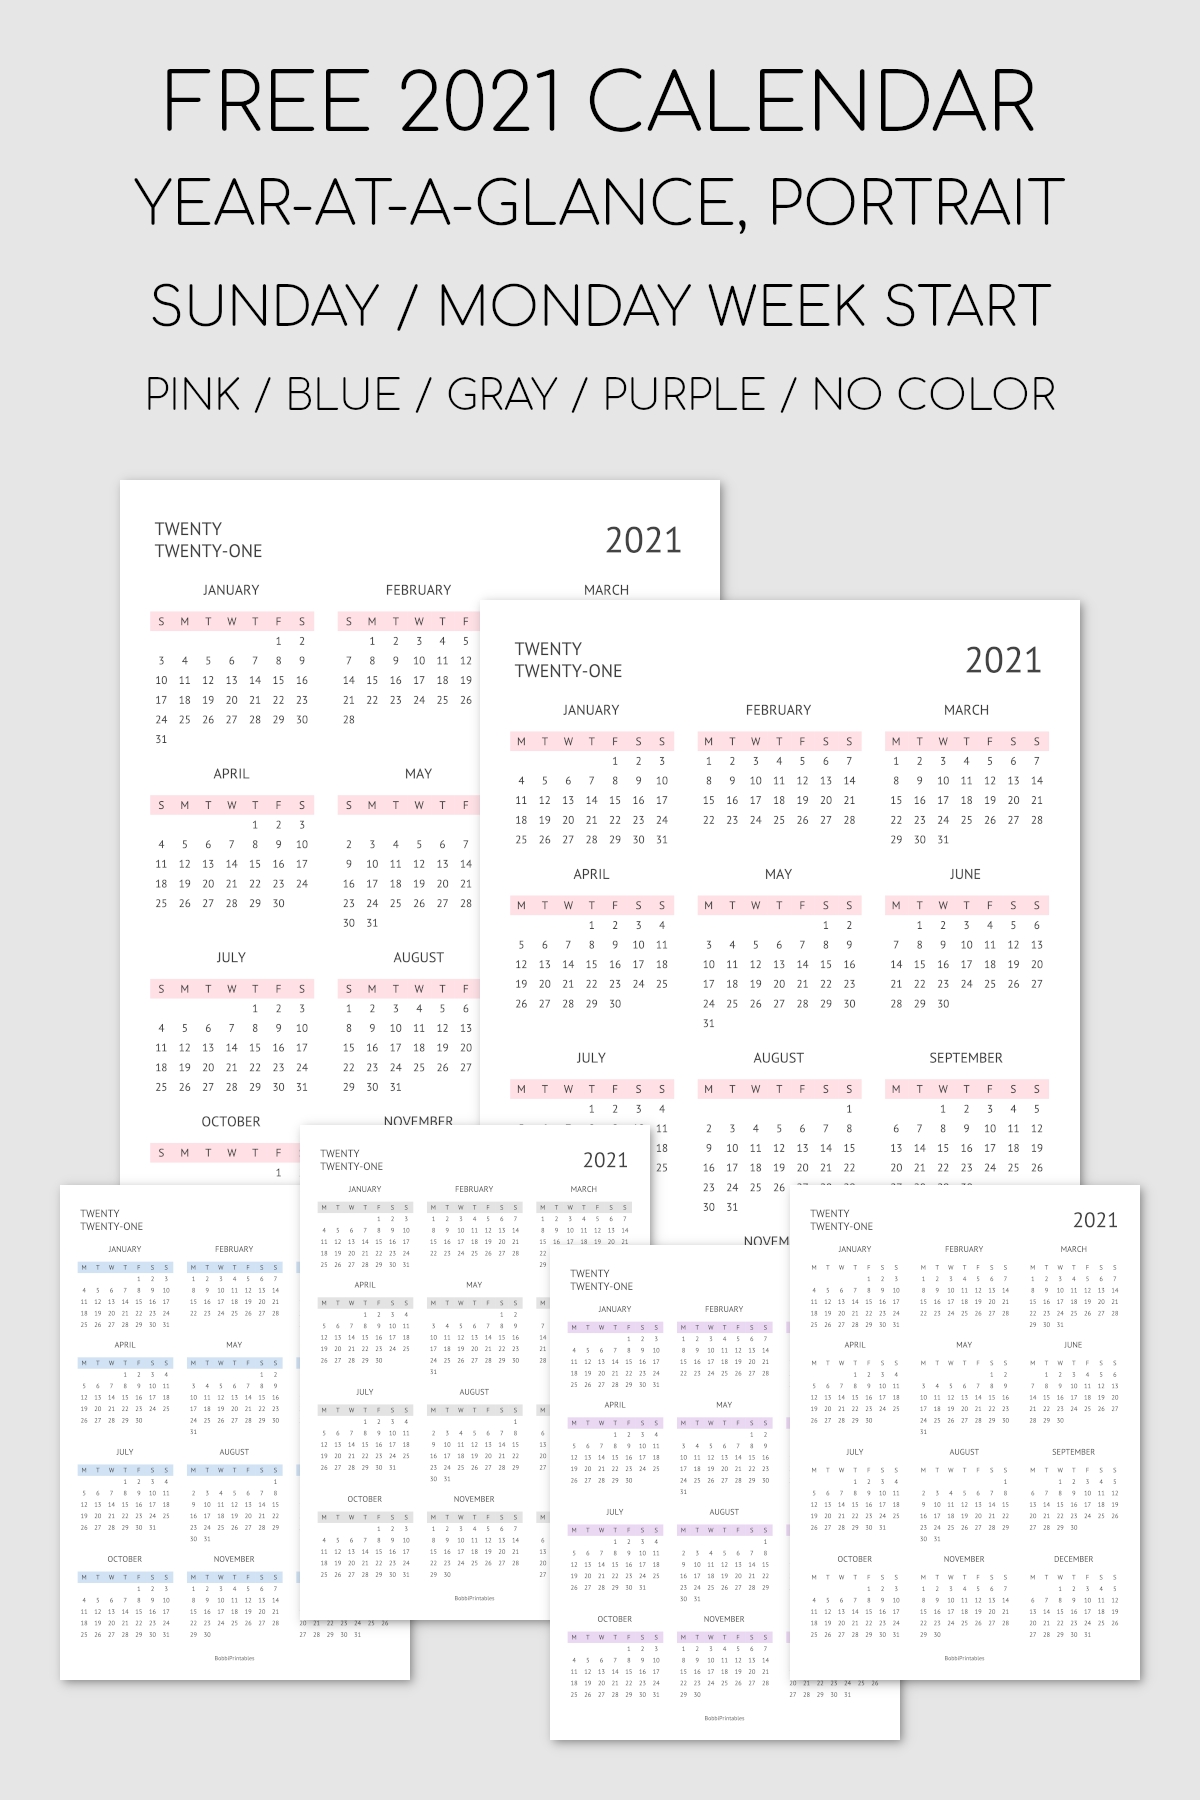 Printable 2021 Year-At-A-Glance Calendar